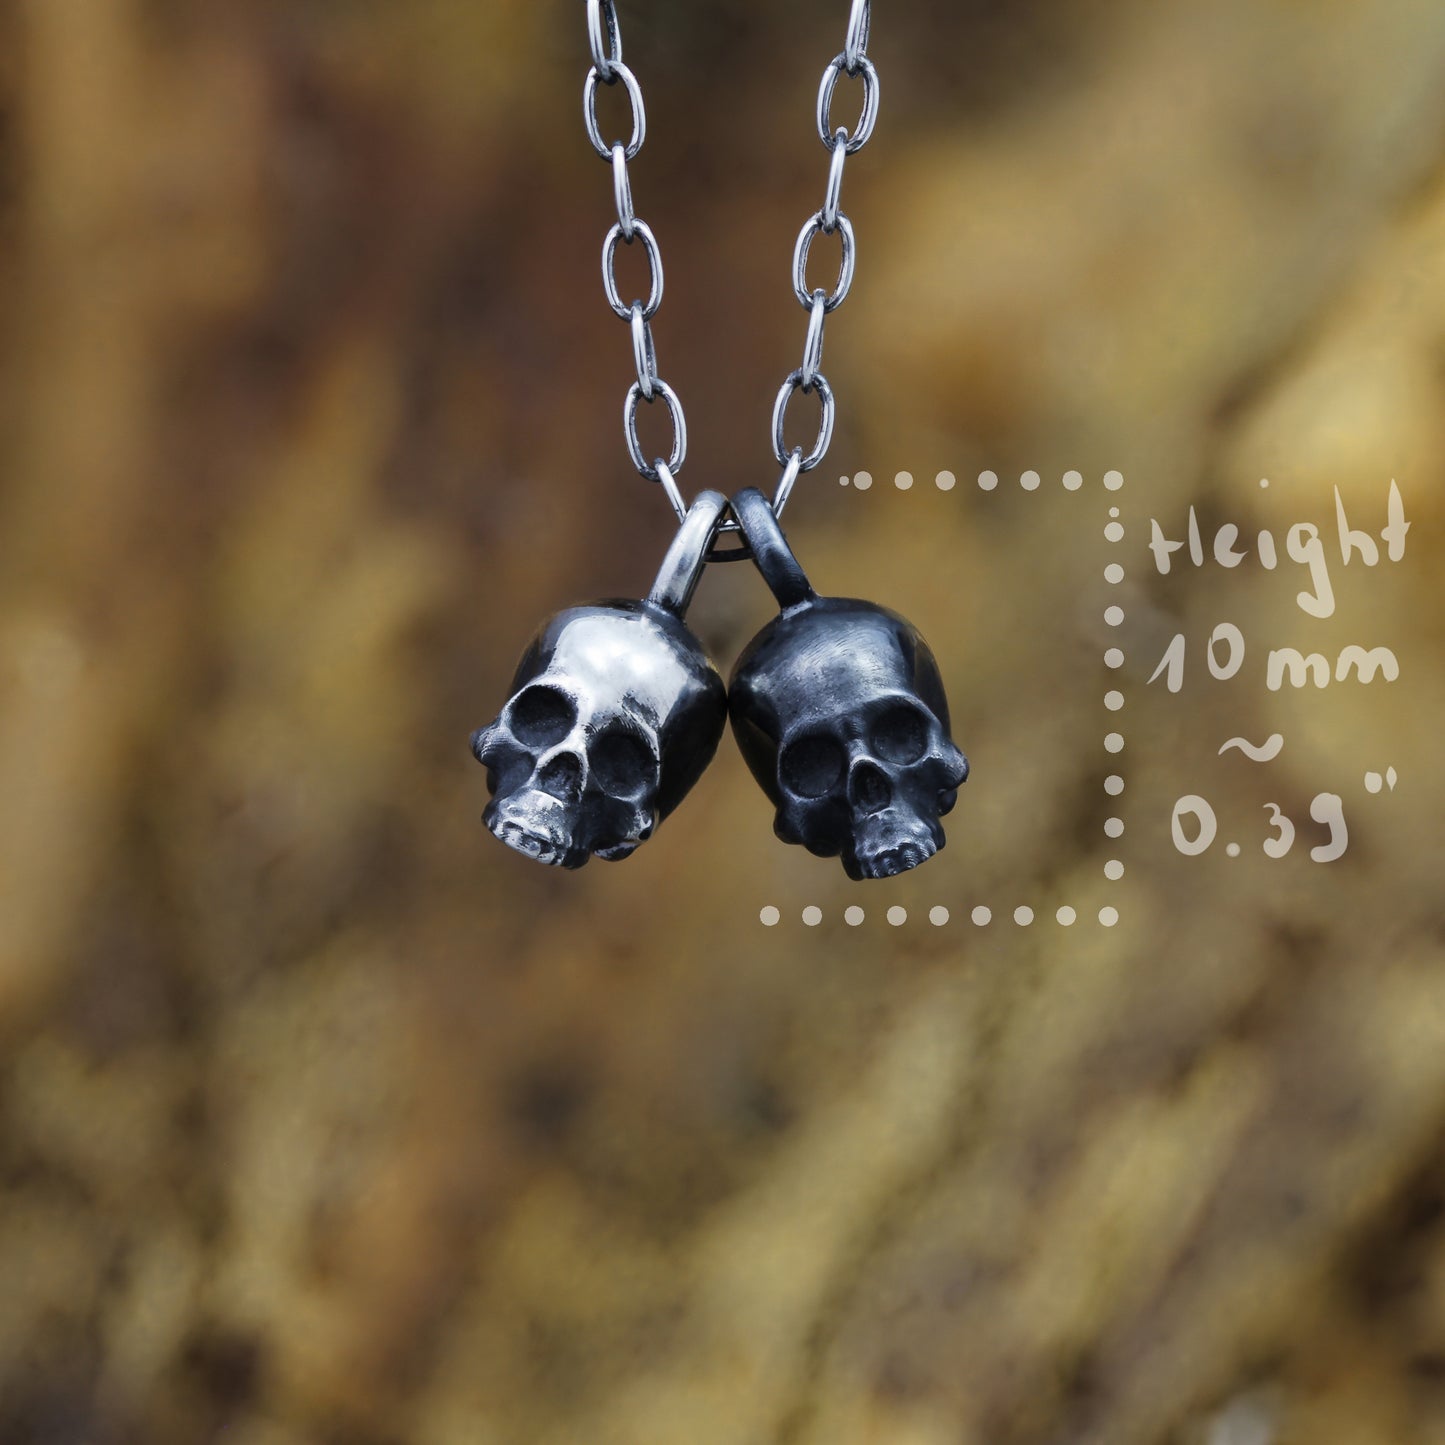 Tiny skull pendant necklace